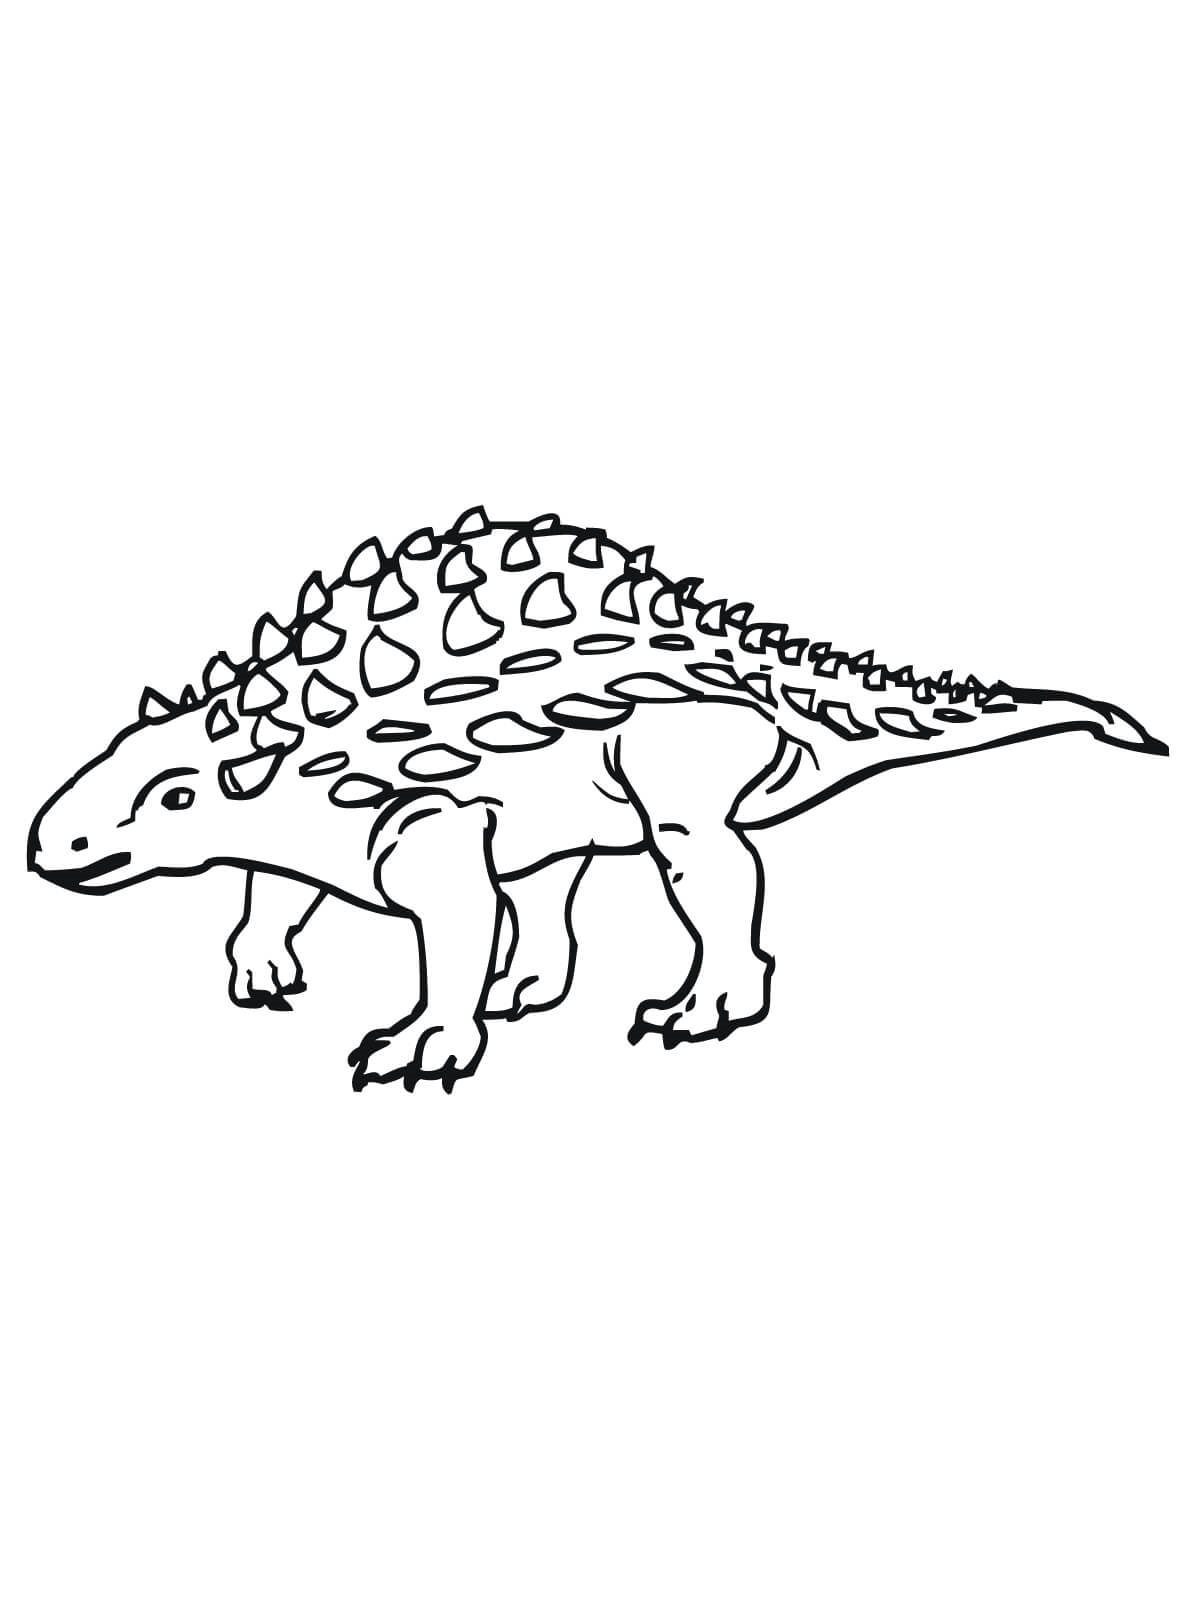 Ankylosaurus Ankylosaurid Dinosaur Coloring Page Coloring Page